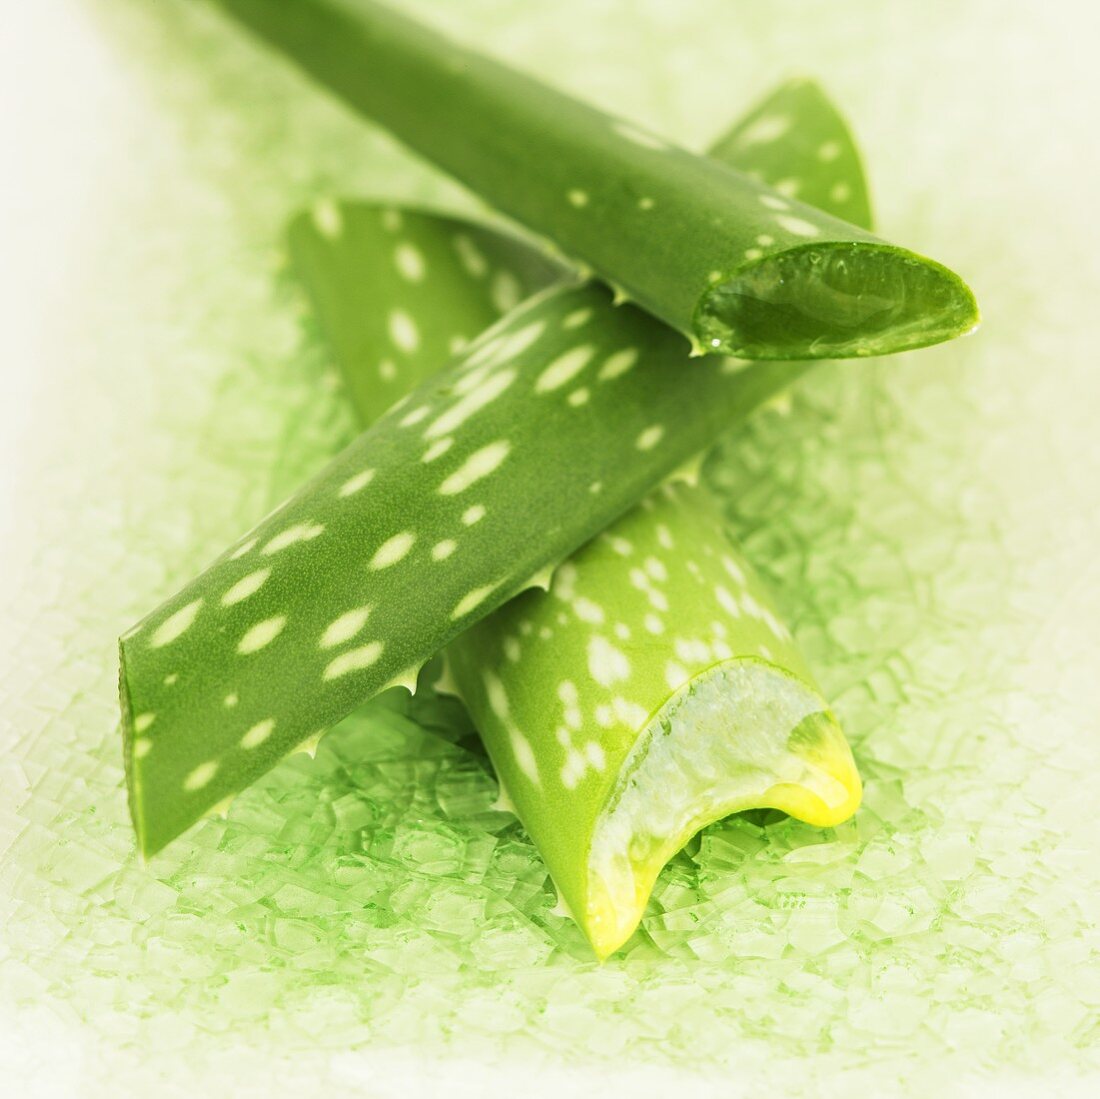 Aloe vera leaves on green ceramic